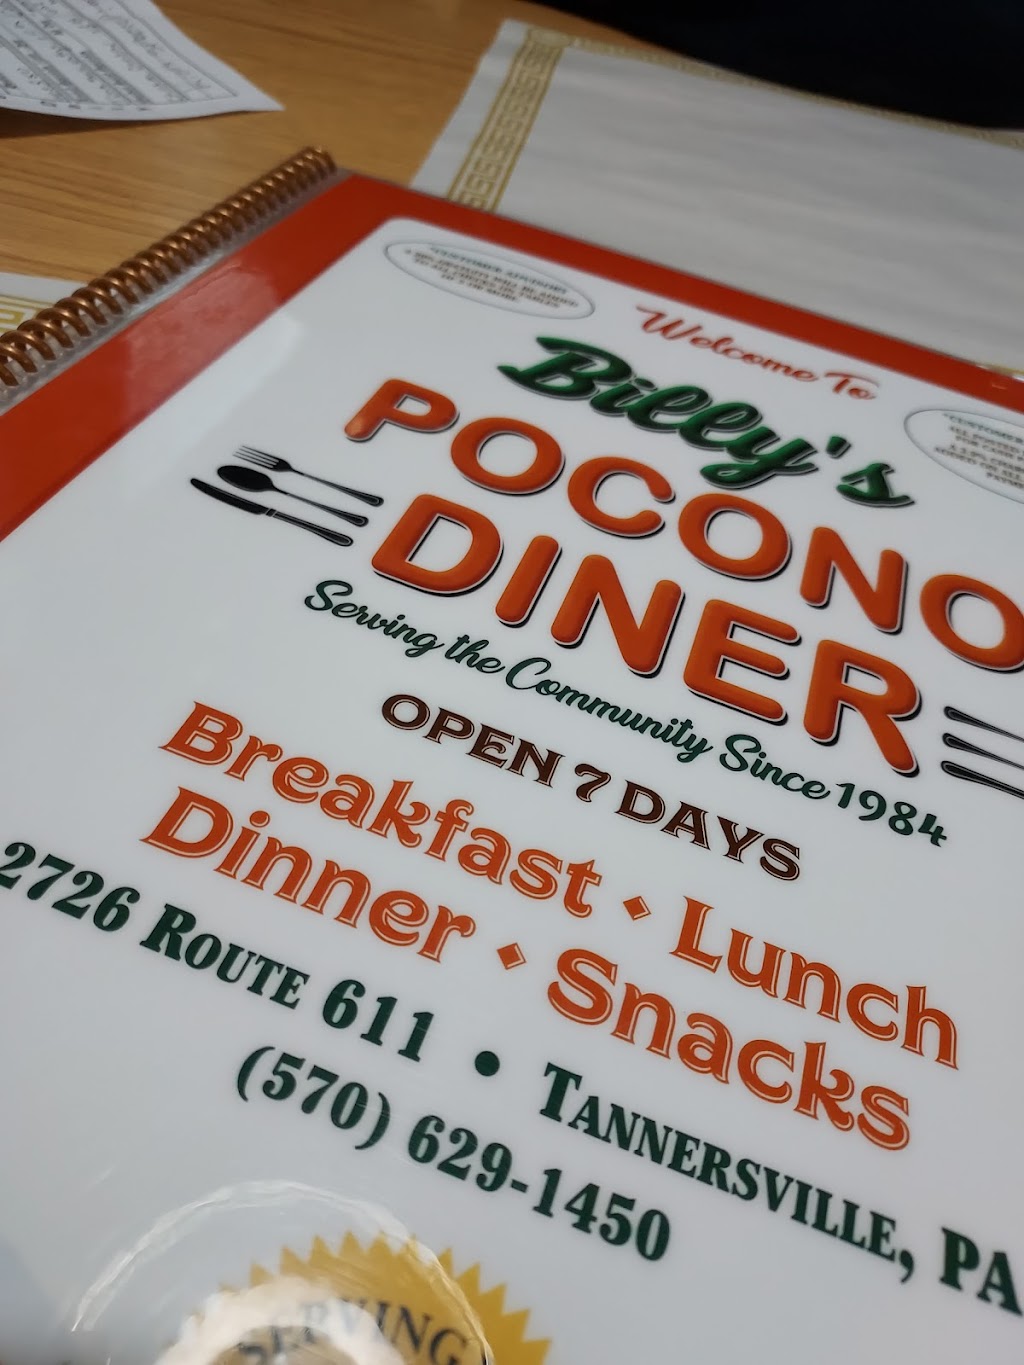 Billys Pocono Diner | 2726, 2726 PA-611, Tannersville, PA 18372 | Phone: (570) 629-1450